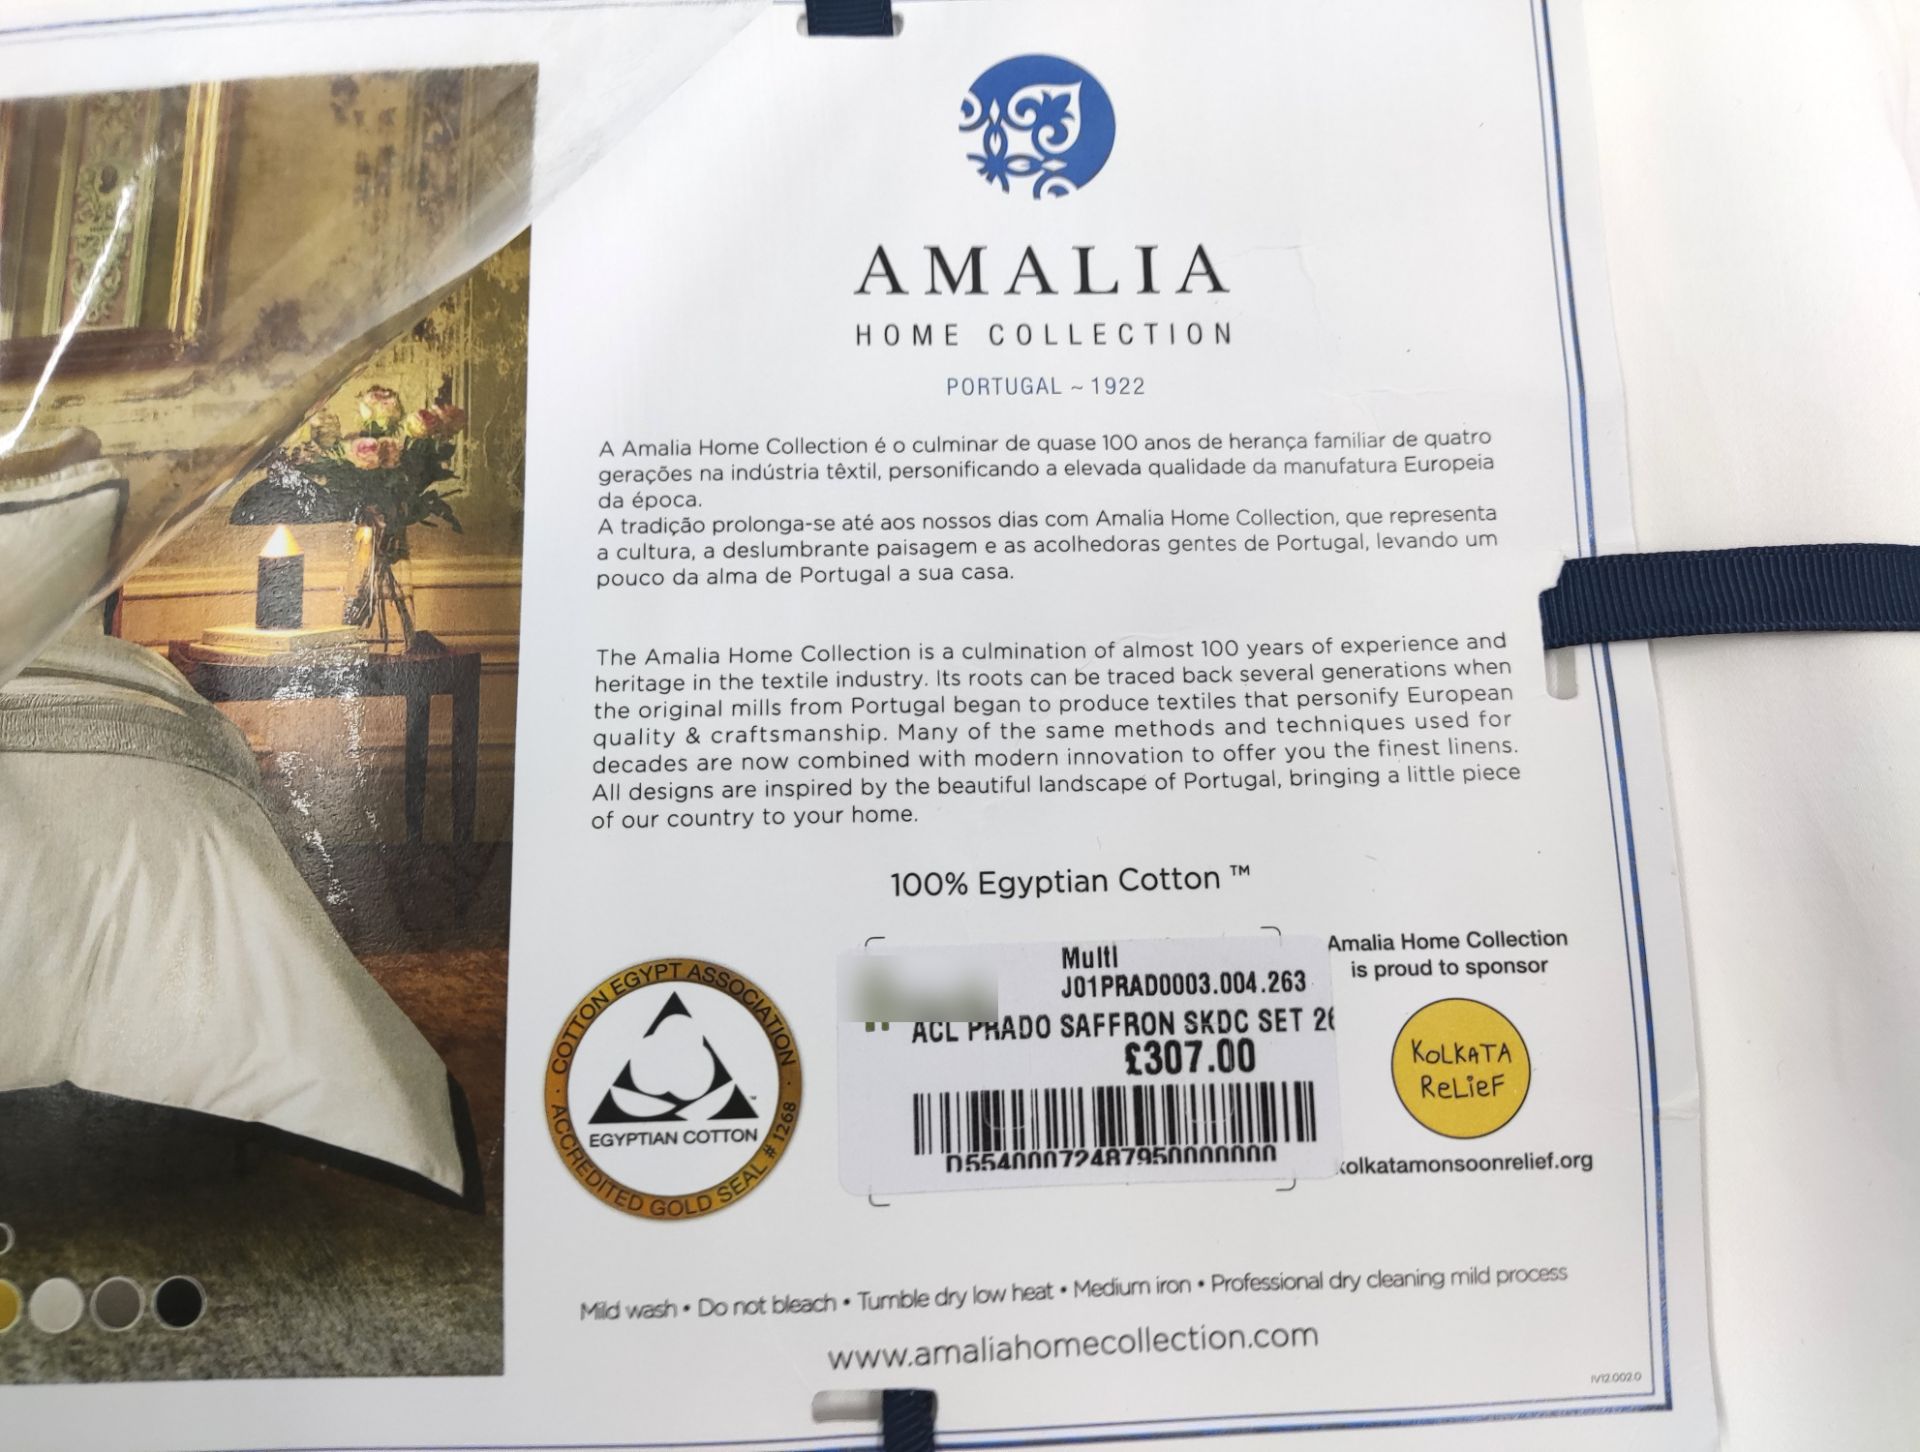 1 x AMALIA Prado Saffron Super King Duvet Cover Set - New - Original RRP £307.00 - Image 4 of 8